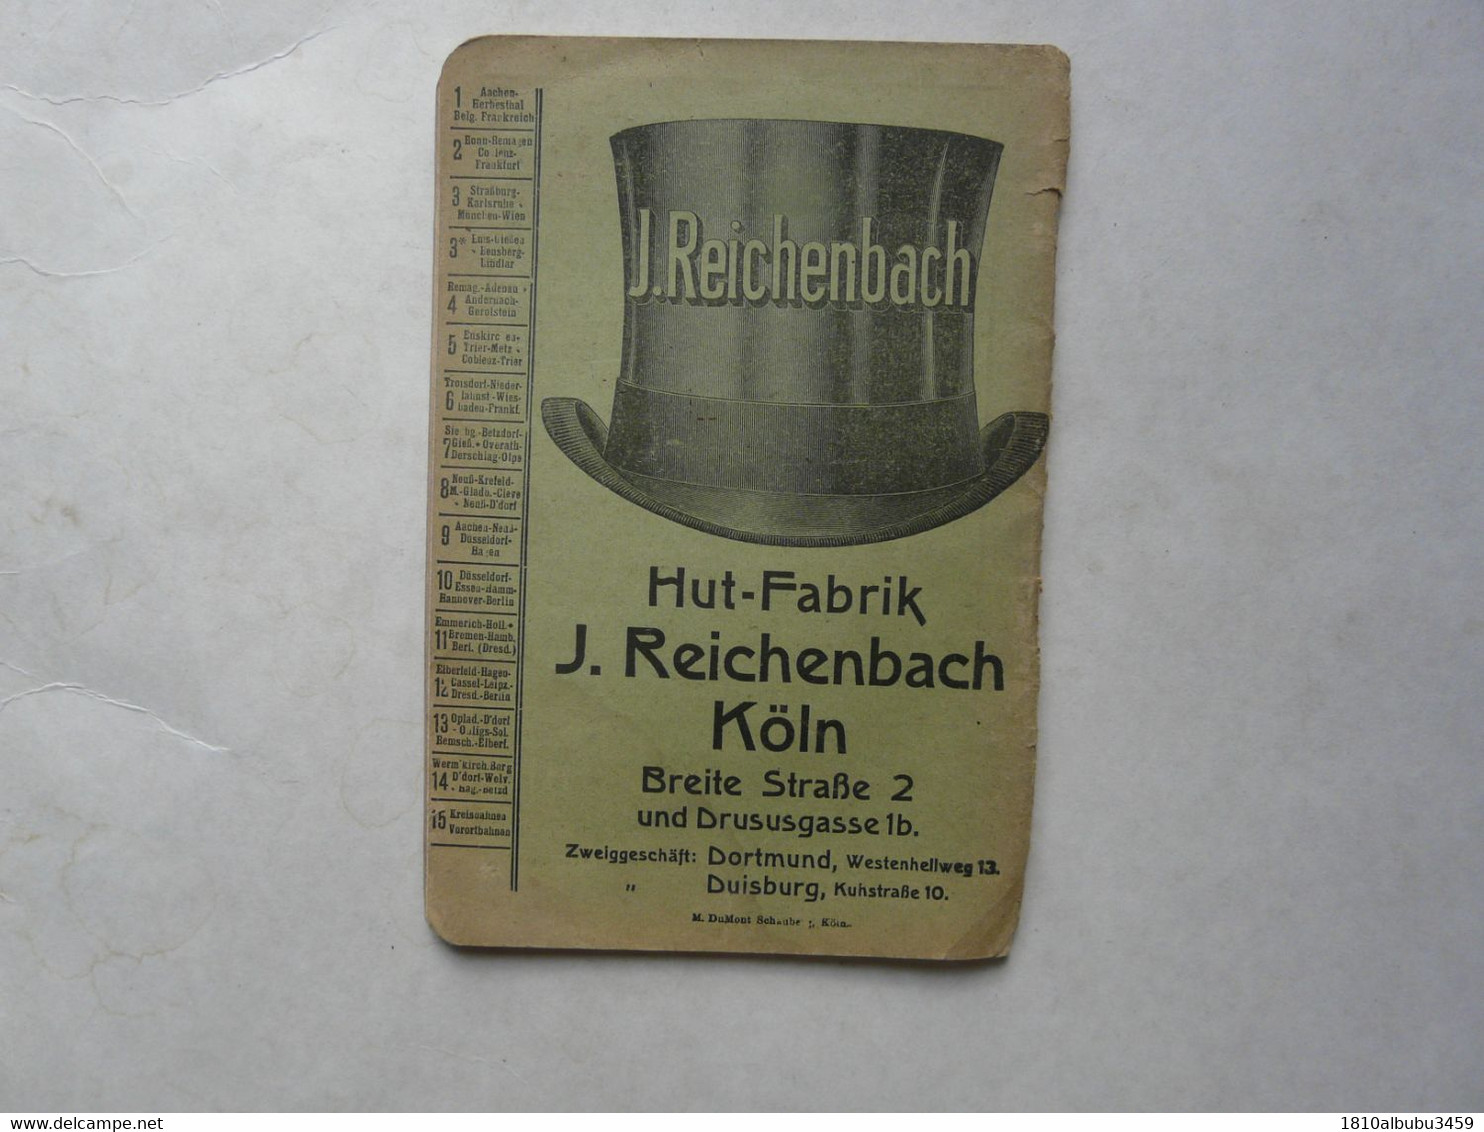 FAHRPLAN M. DUMONT SCHAUBERG 1920-1921 - Alemania Todos